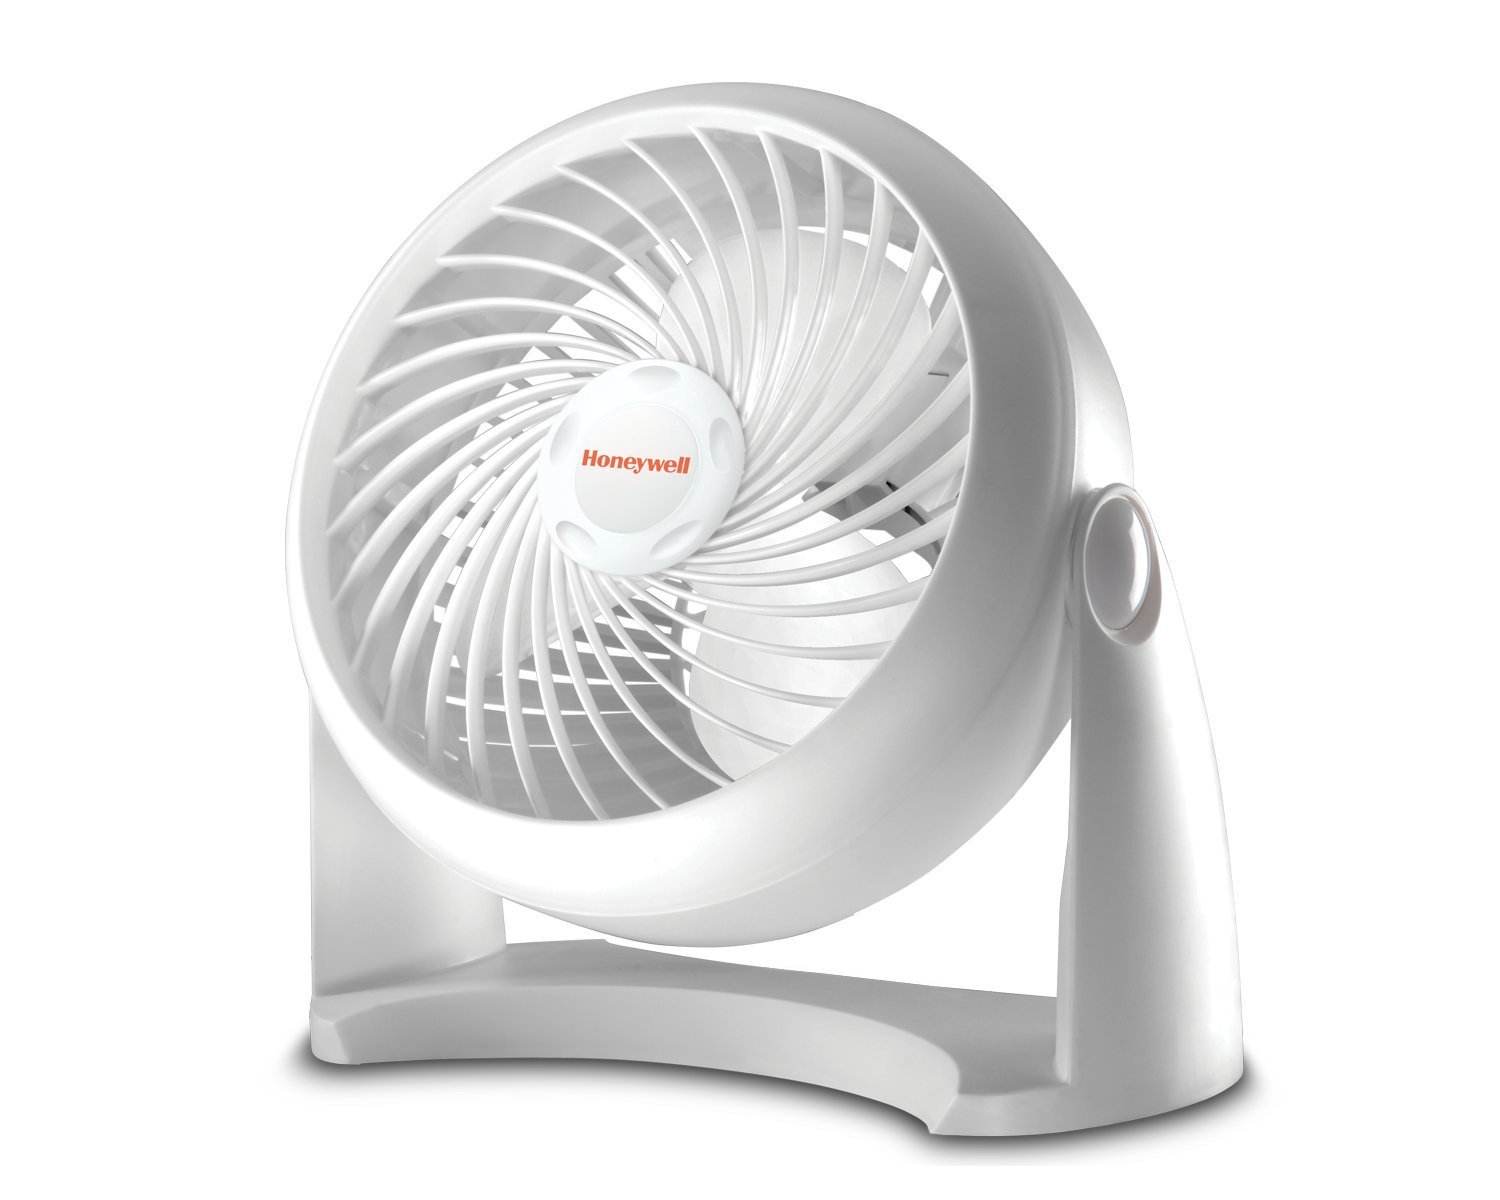 Honeywell Tabletop Air-Circulator Fan – Just $10.07!